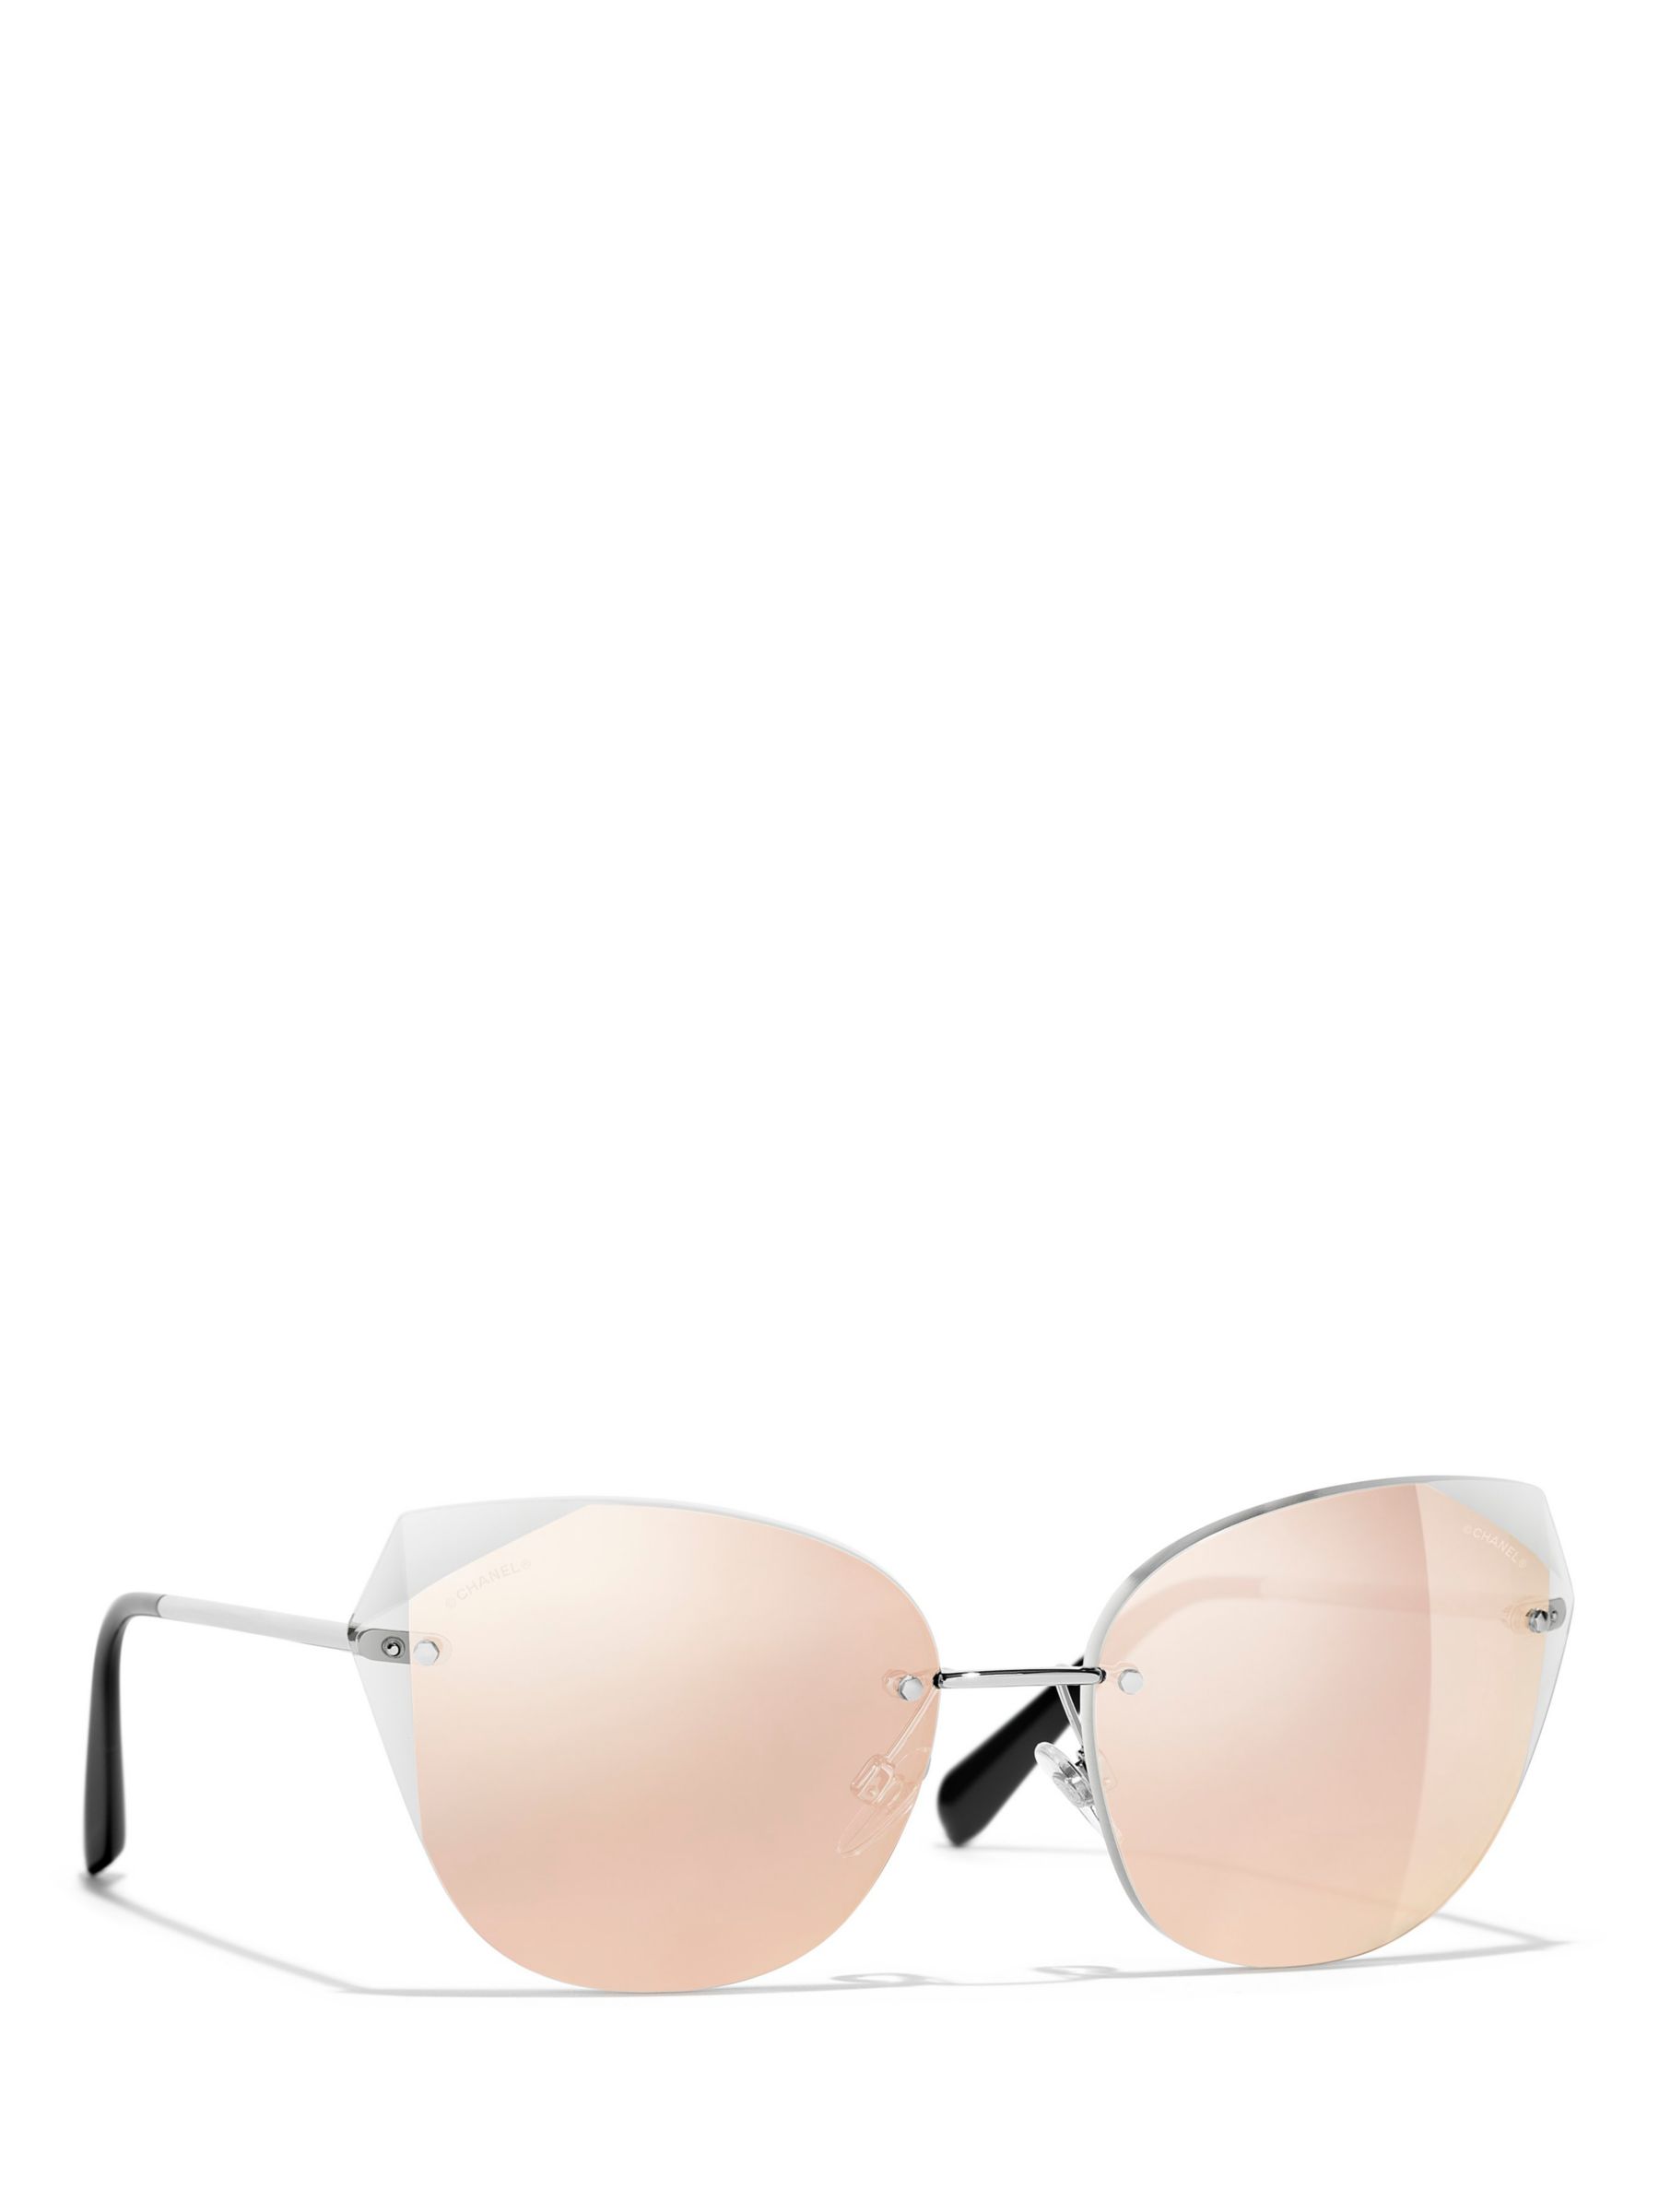 CHANEL Cat Eye Sunglasses CH4237 Silver/Pink